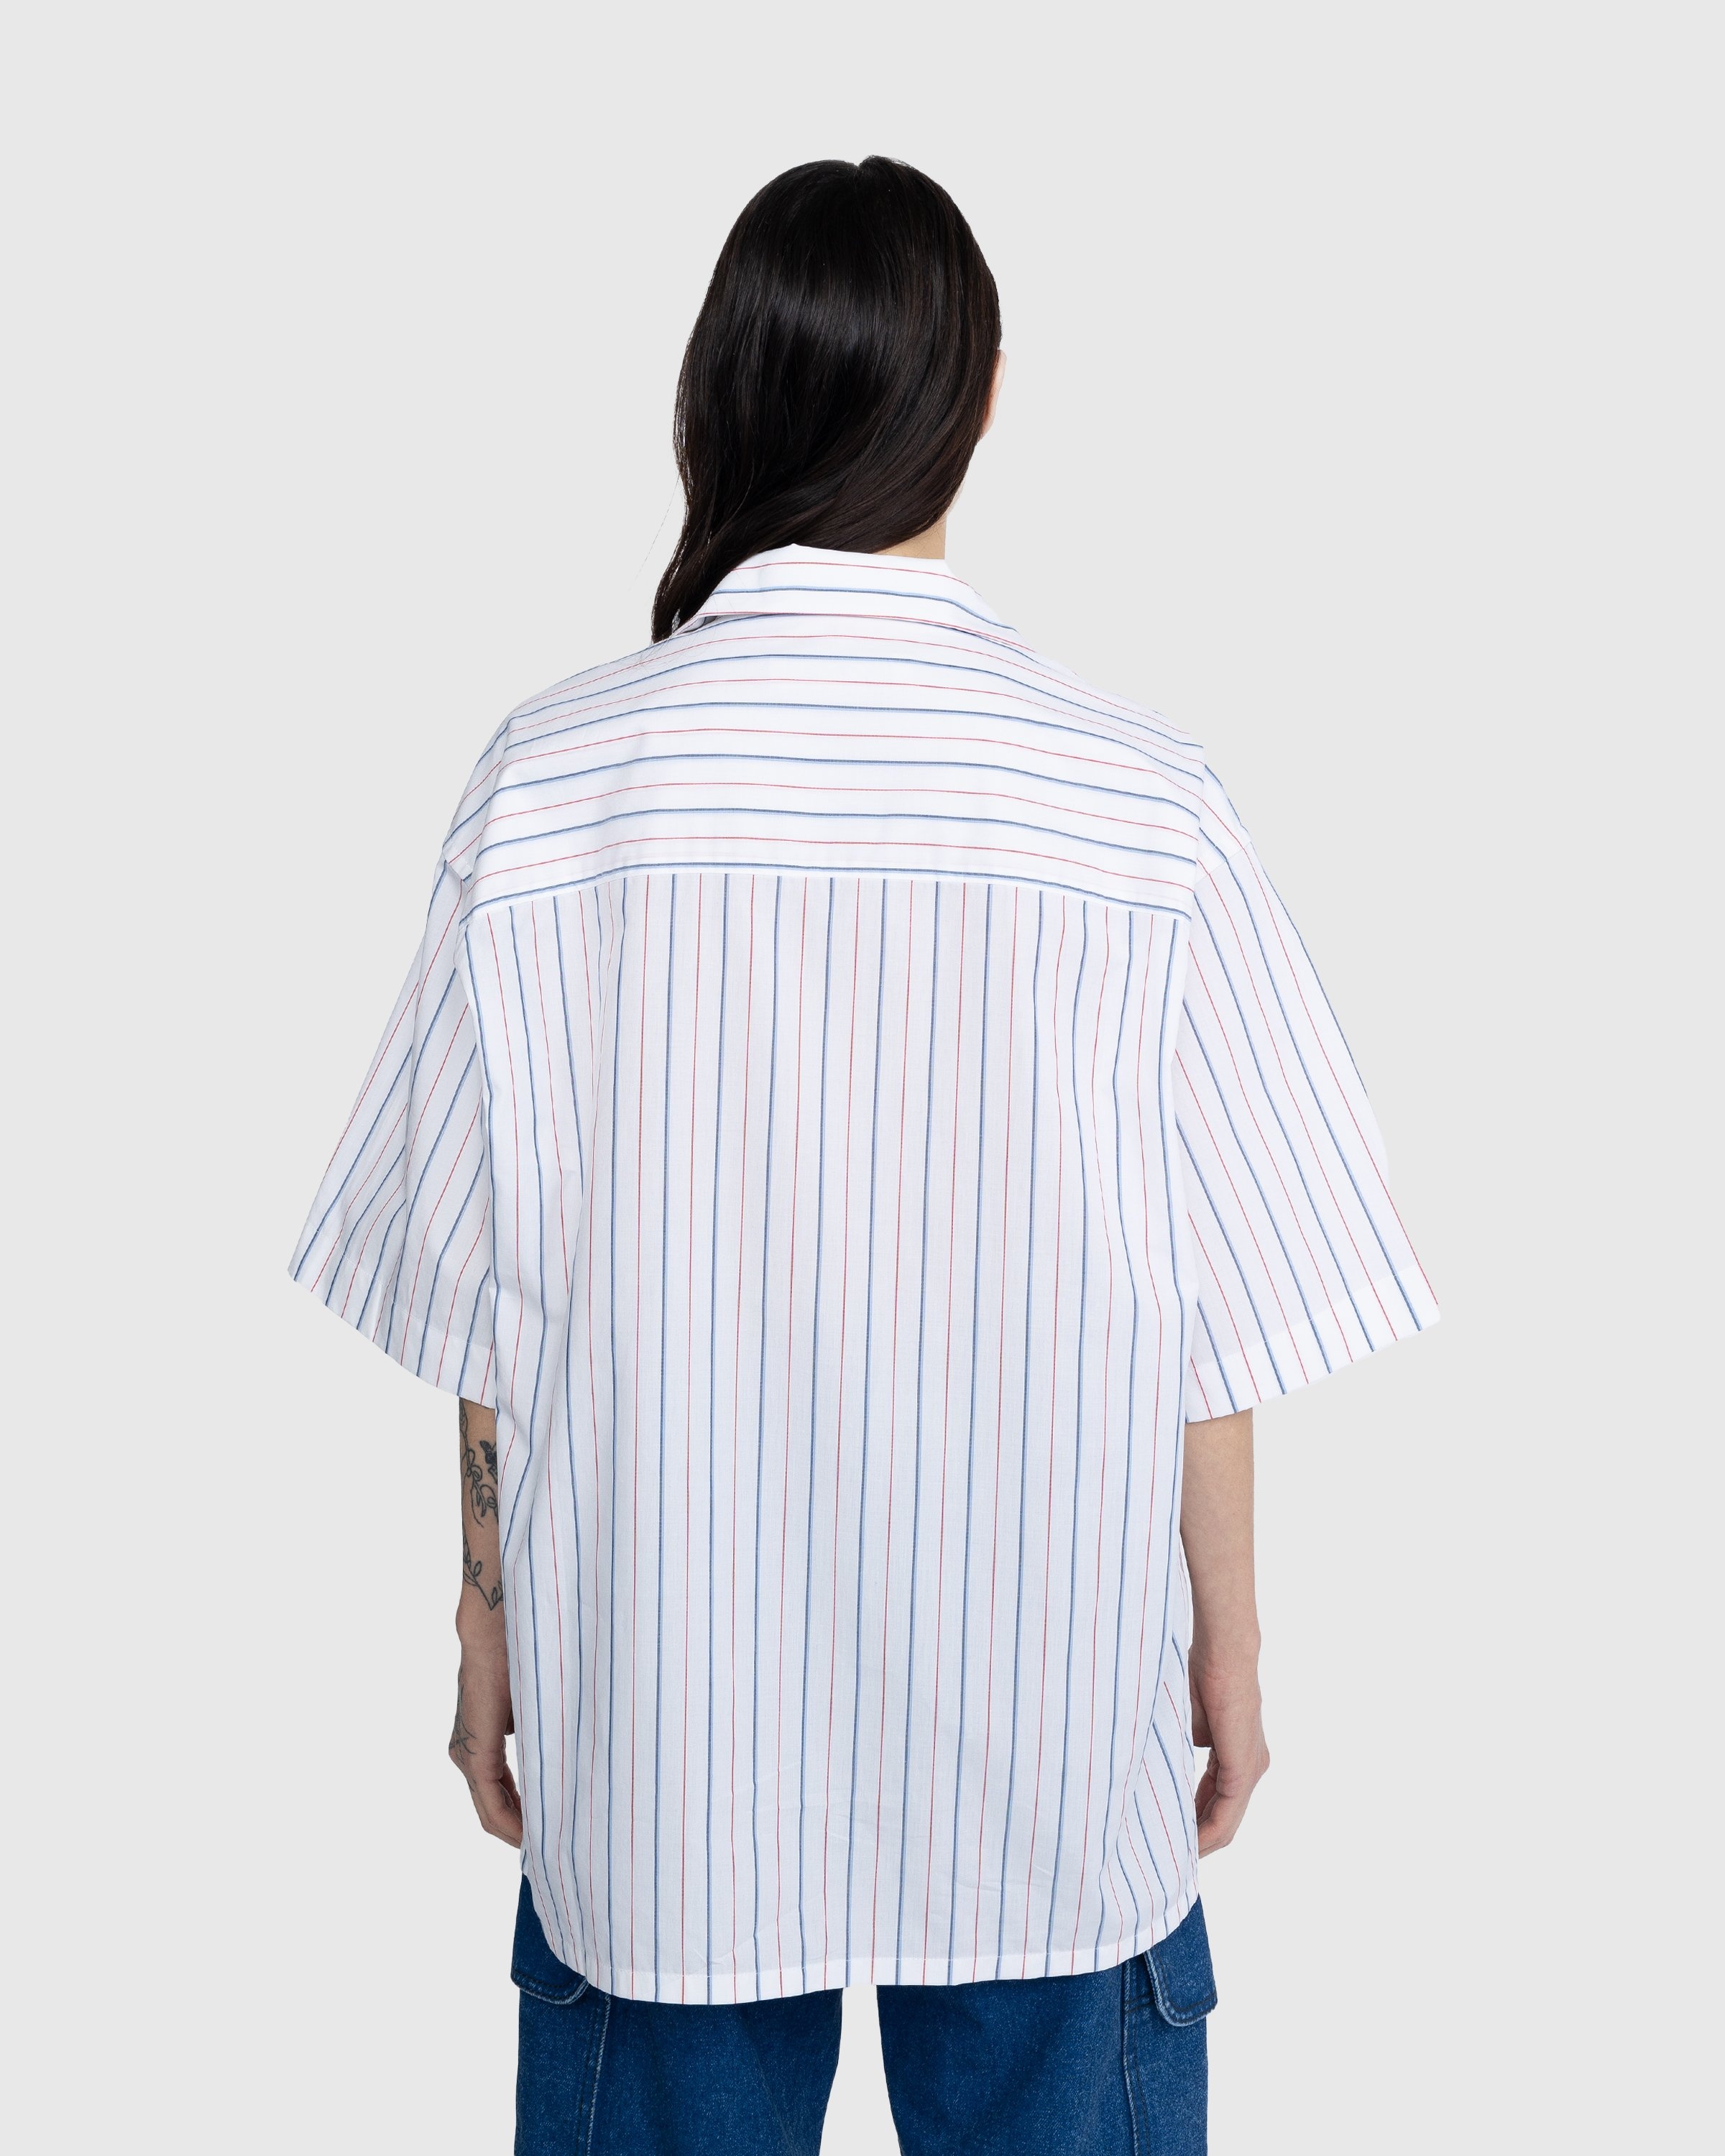 Marni – Striped Button-Up Shirt White - Shirts - White - Image 3